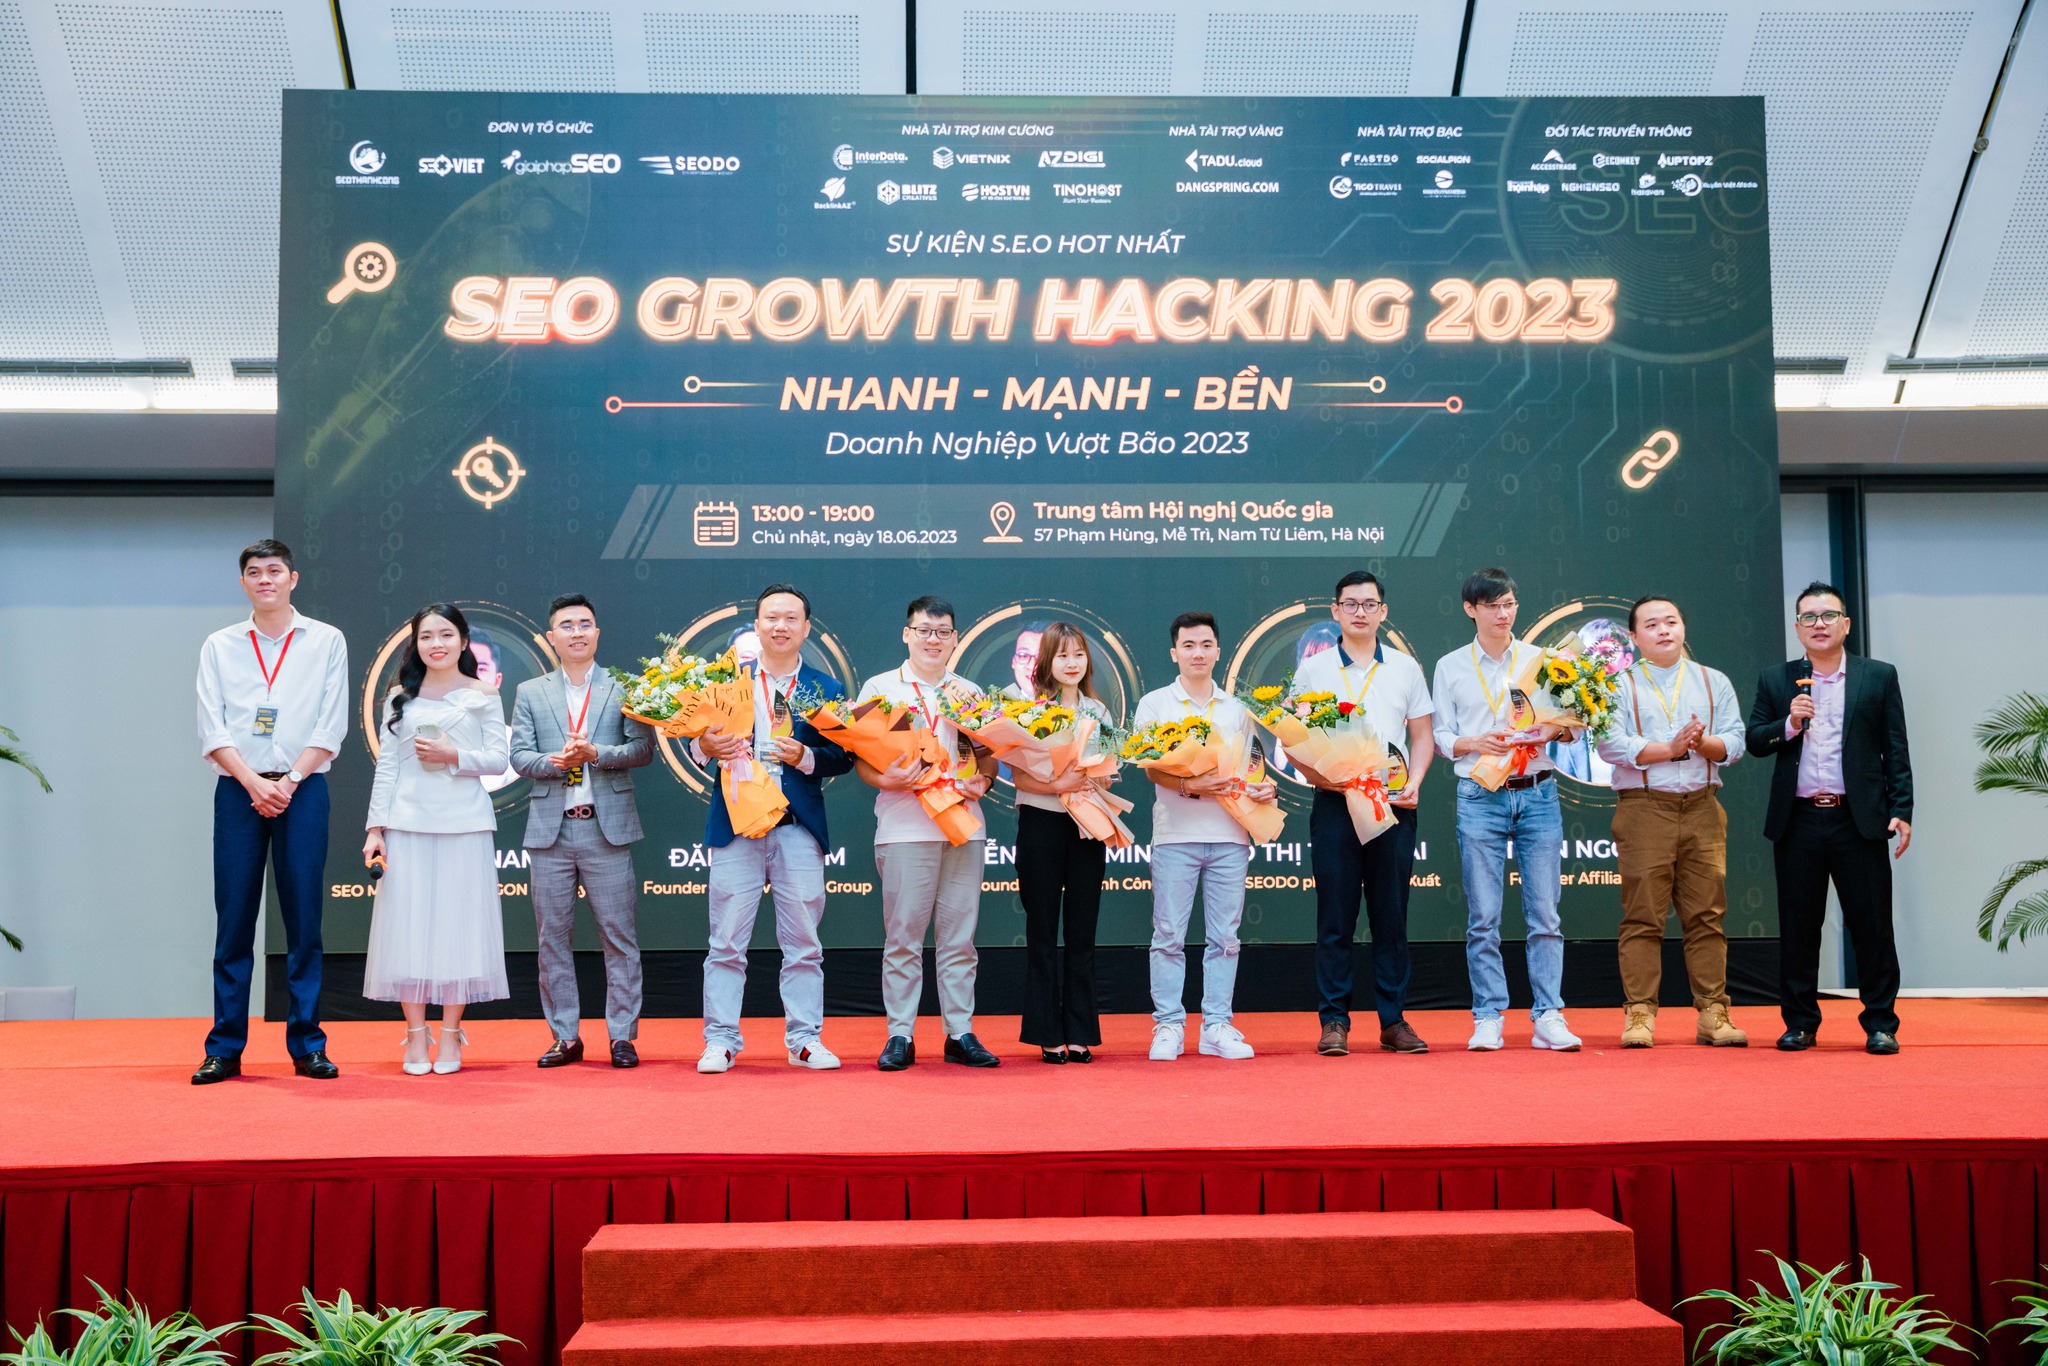 SEO Growth Hacking 2023